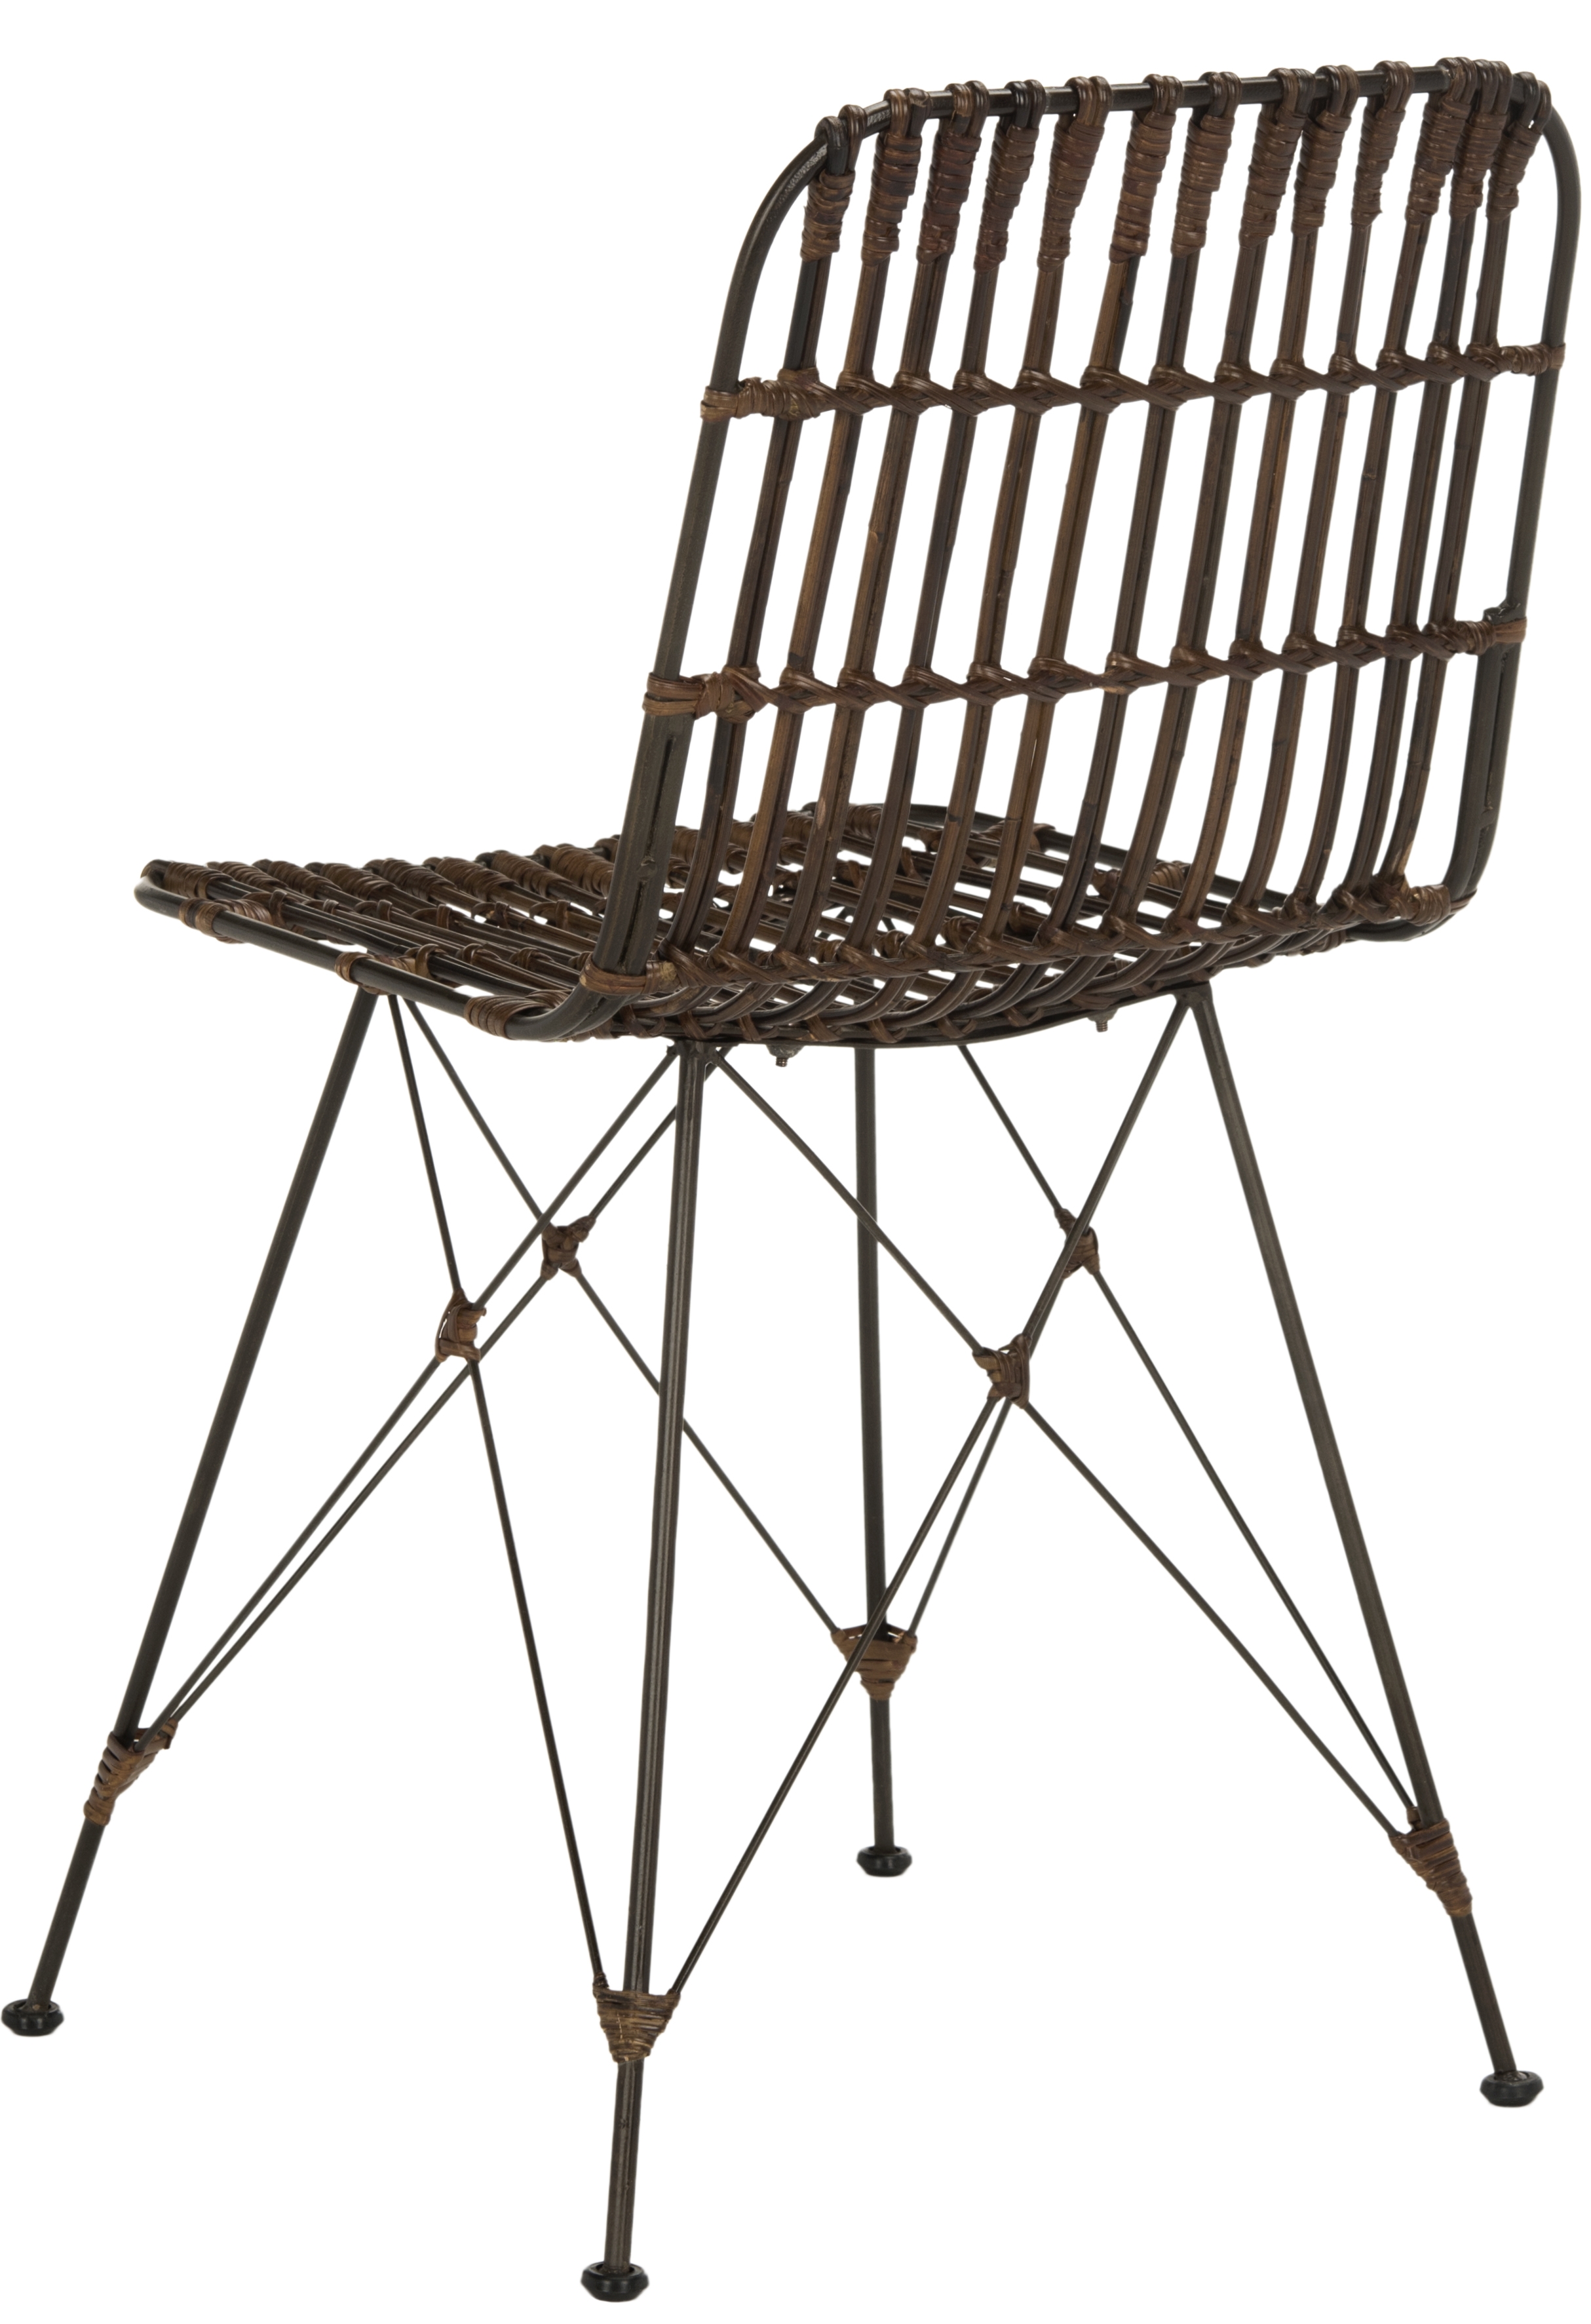 Minerva Wicker Dining Chair (Set of 2) - Croco Brown - Arlo Home - Image 5